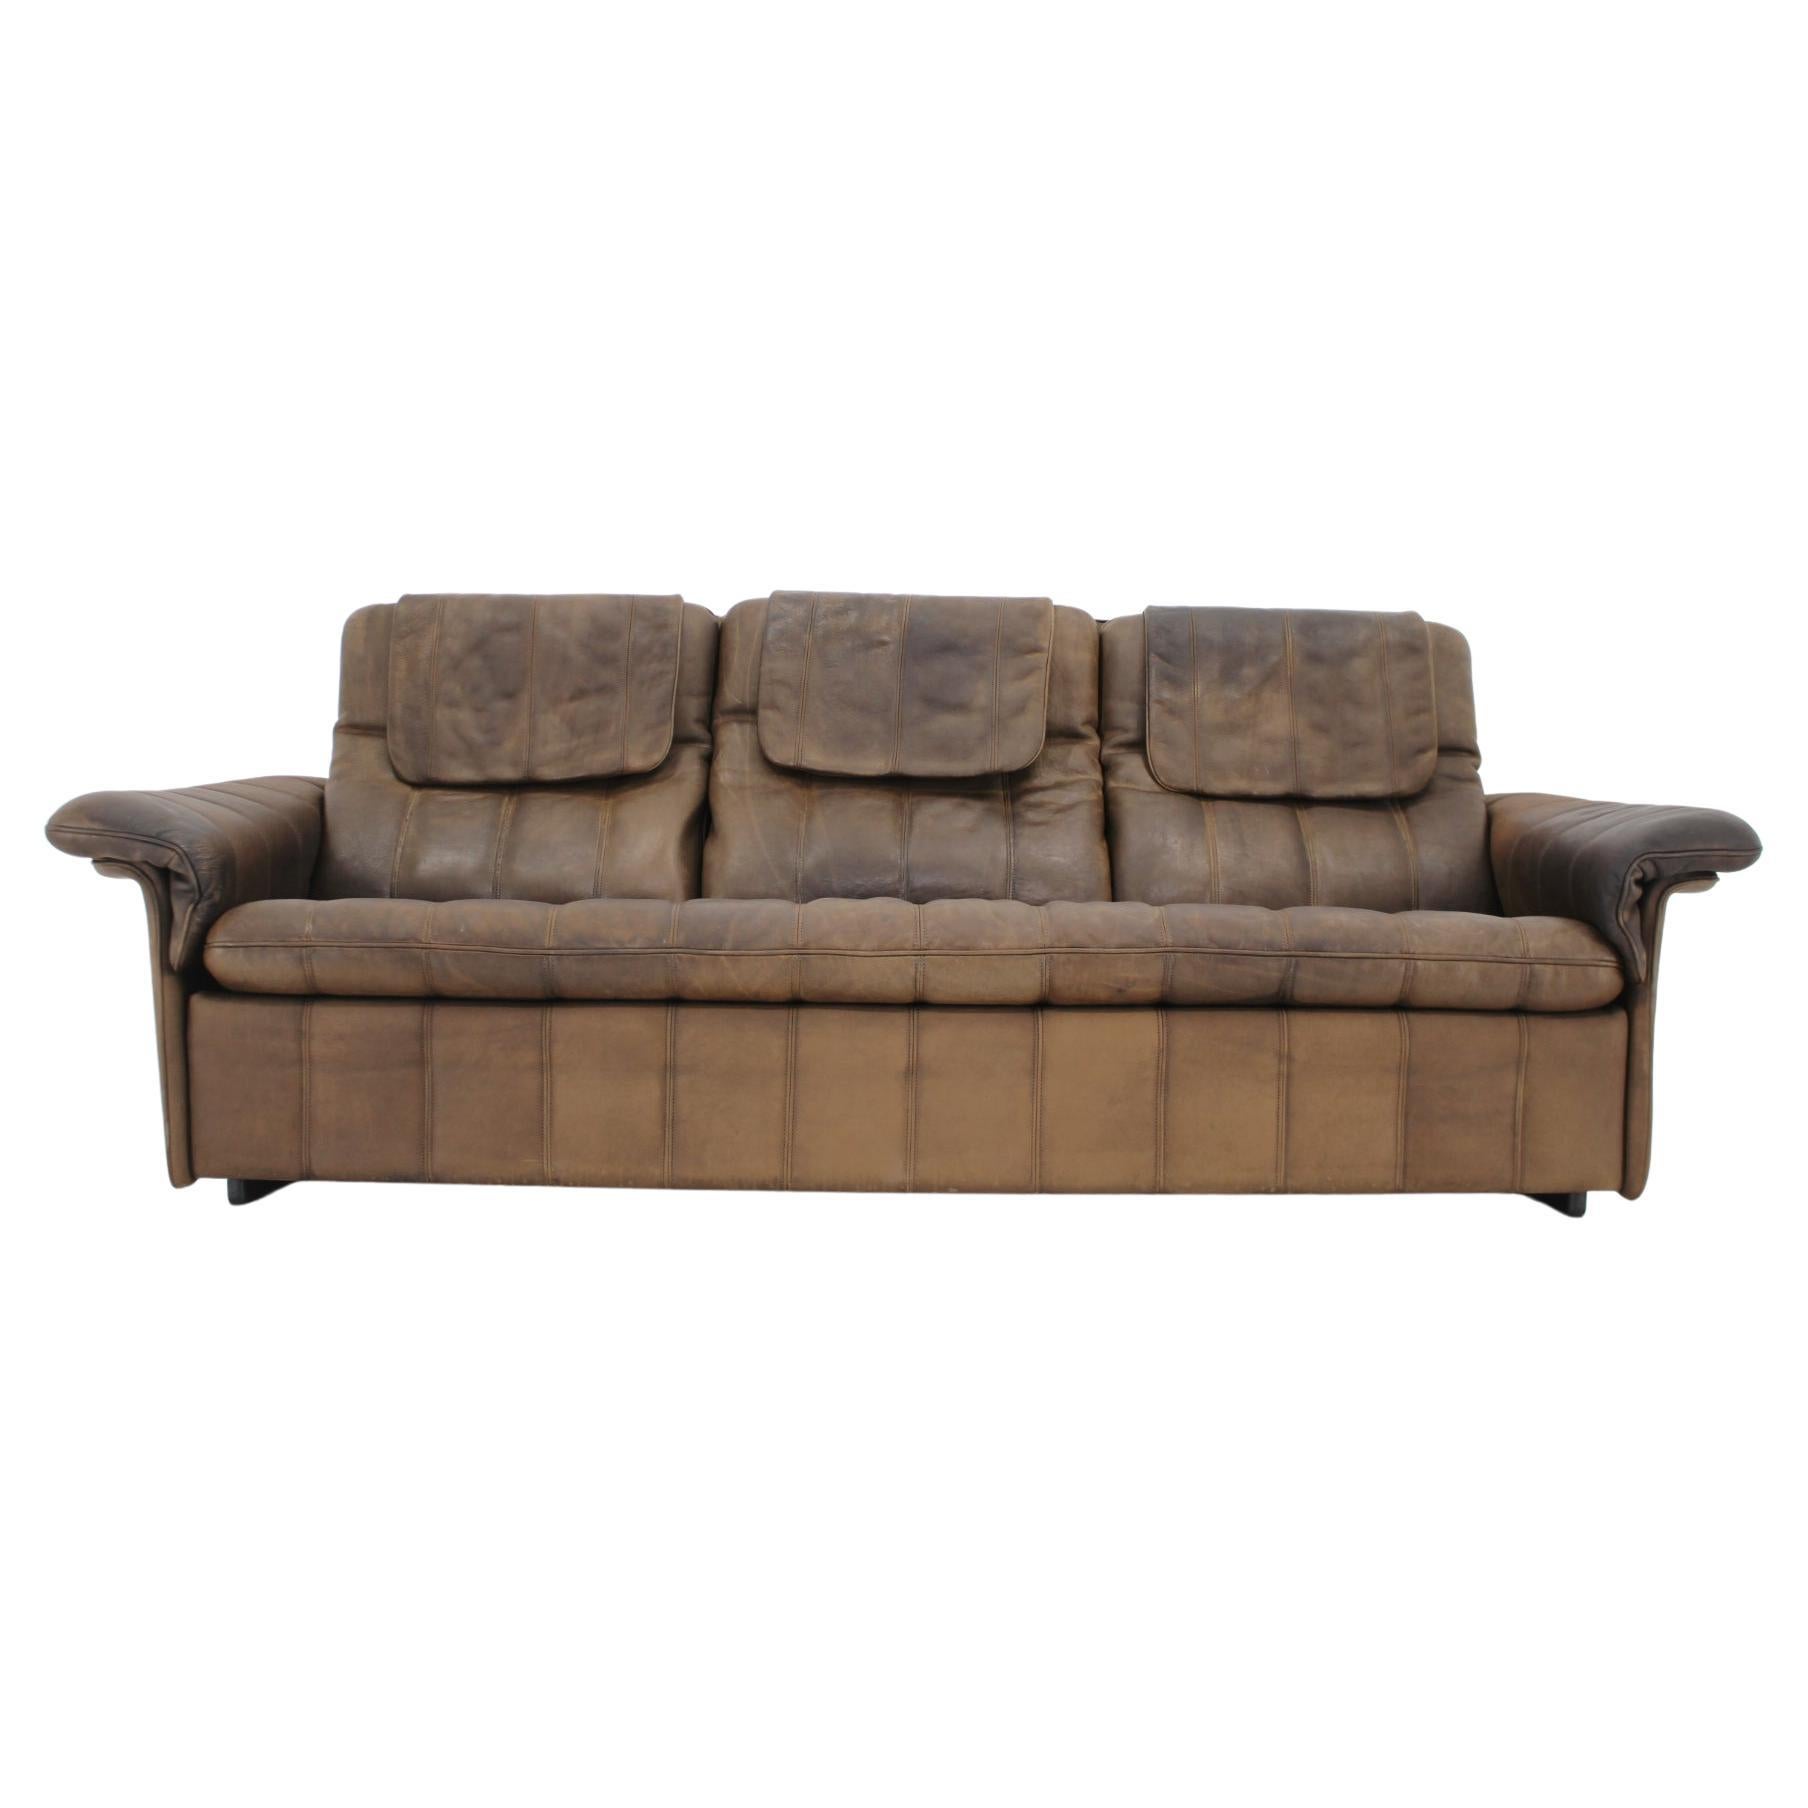 1980s De Sede Exclusive Brown Leather Sofa, Switzerland For Sale